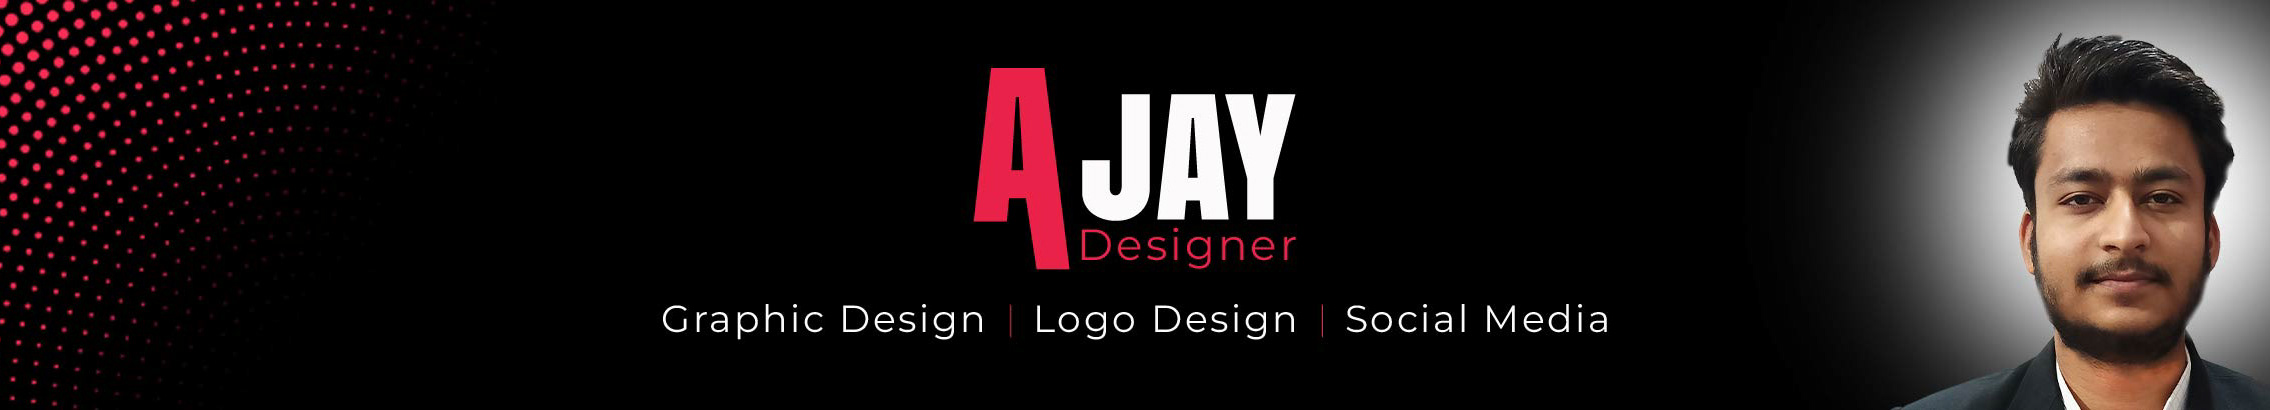 Ajay Jain's profile banner